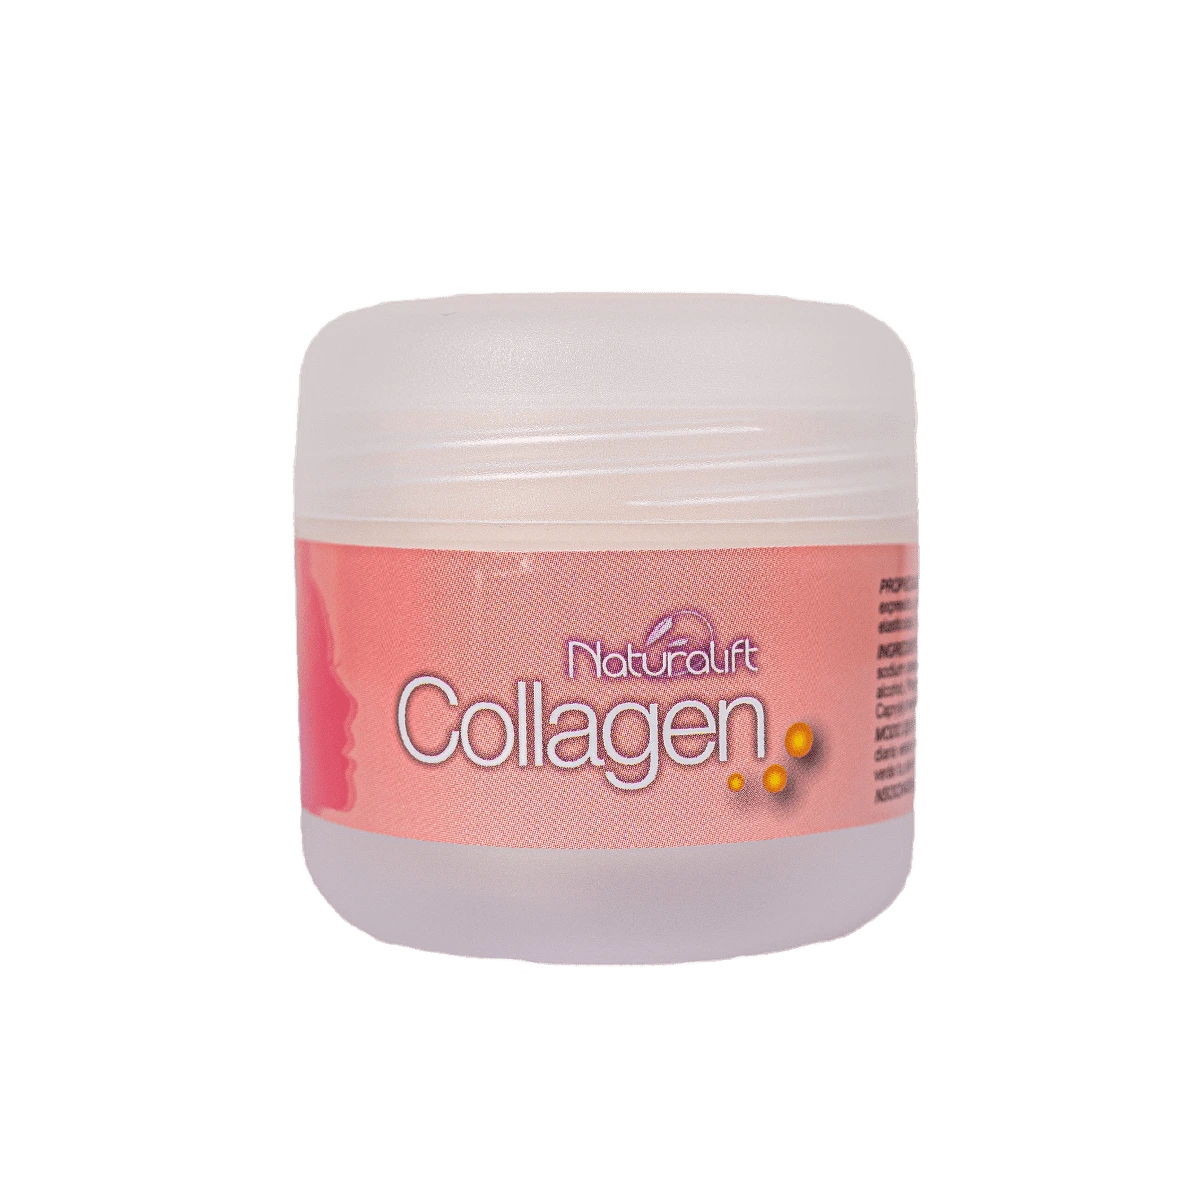 NATURALIFT Collagen